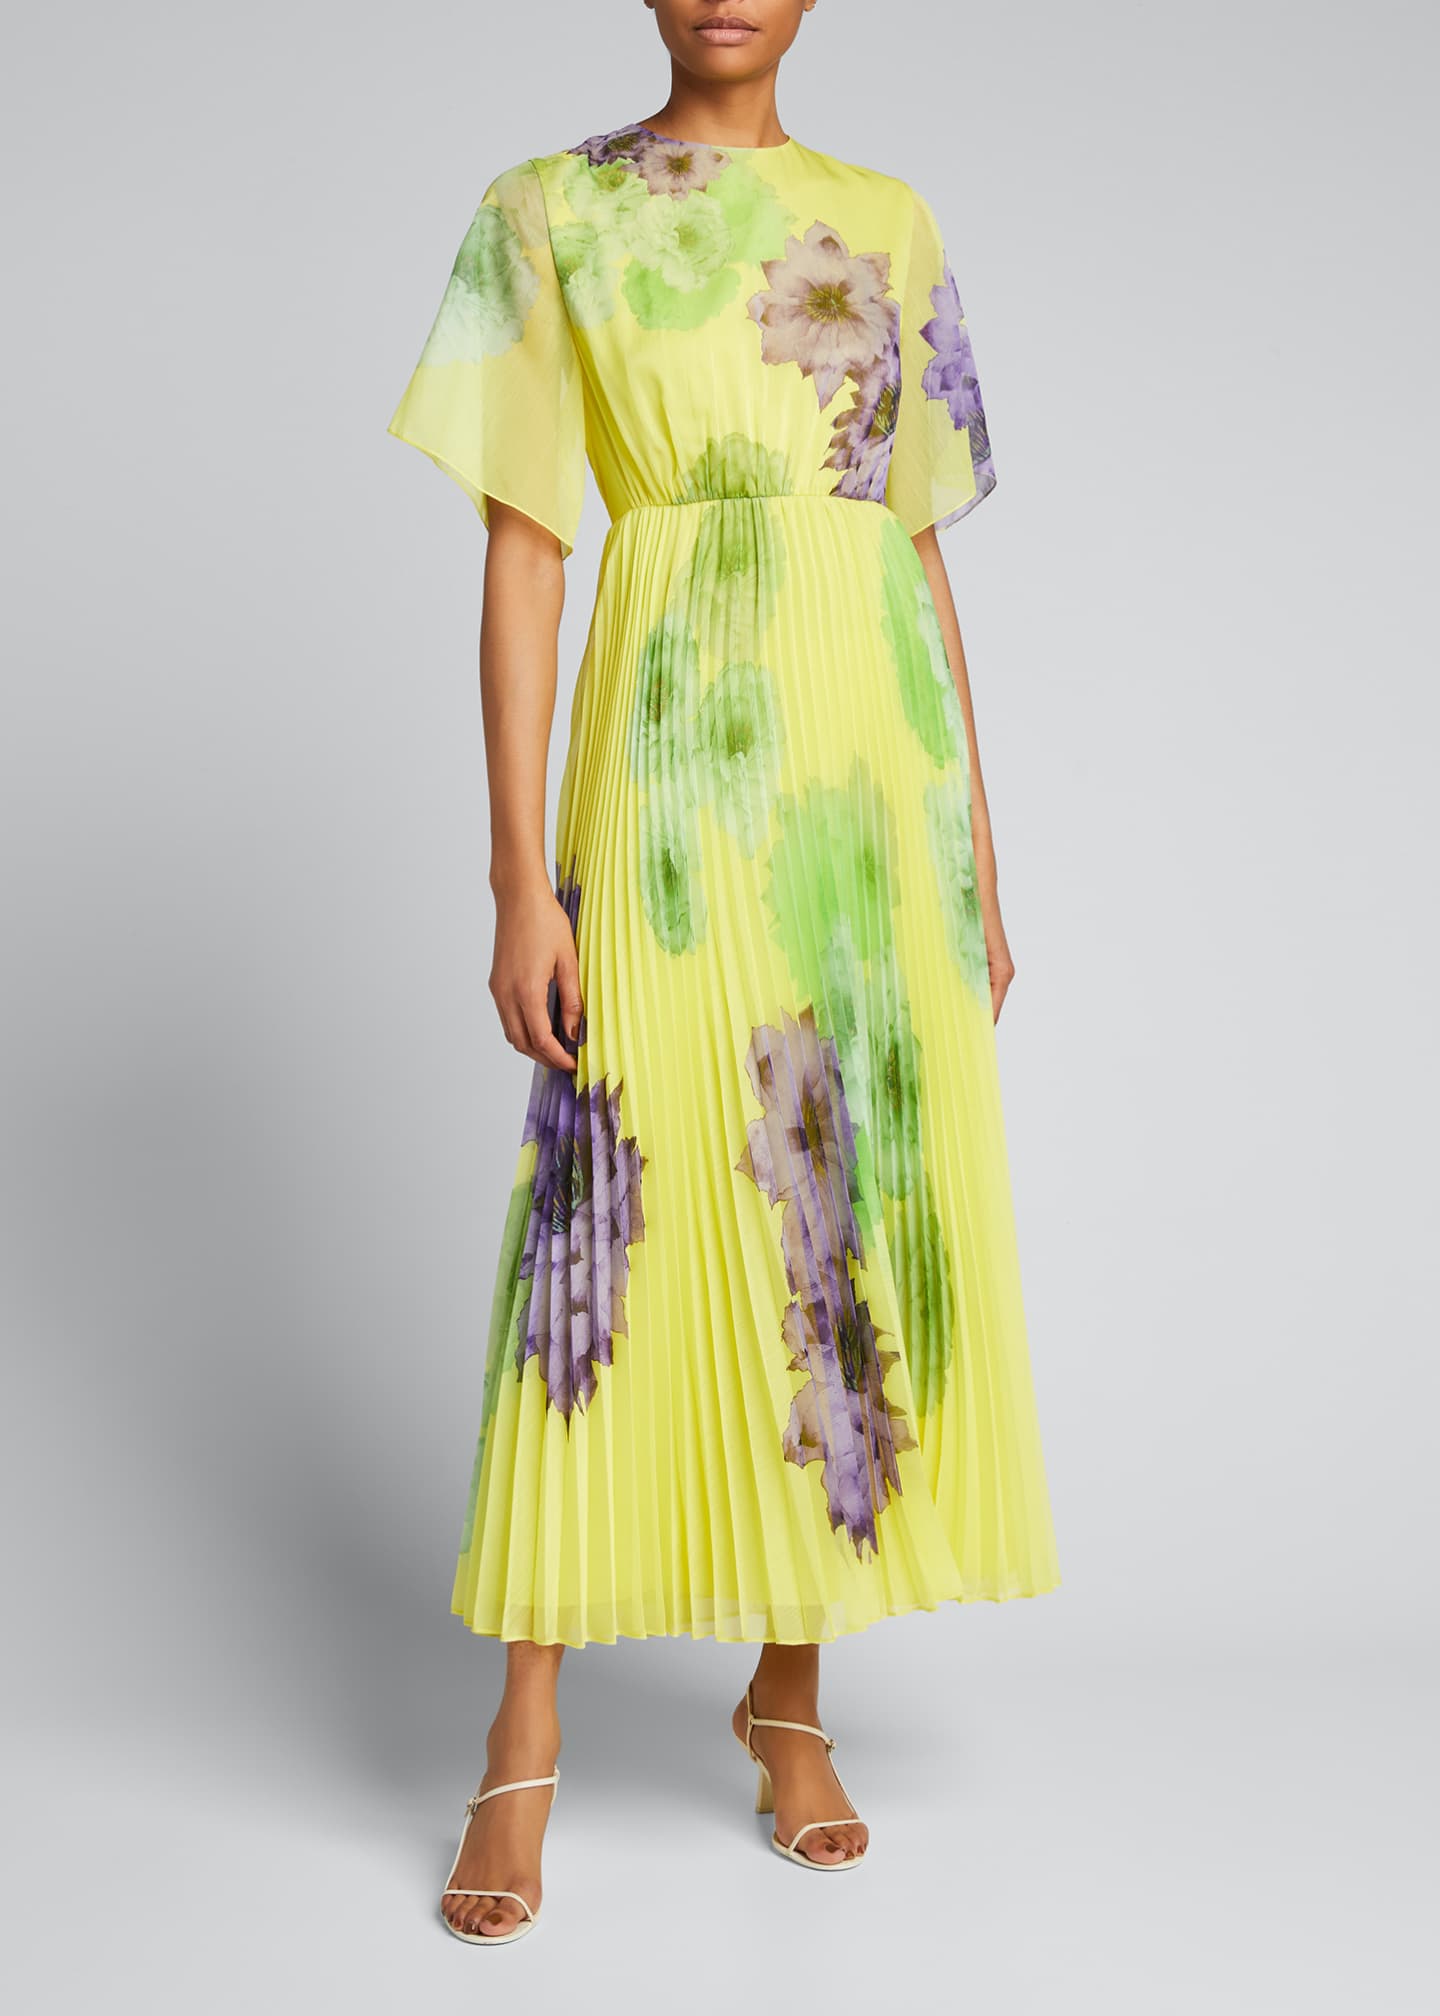 Jason Wu Collection Floral-Print Pleated Midi Dress - Bergdorf Goodman